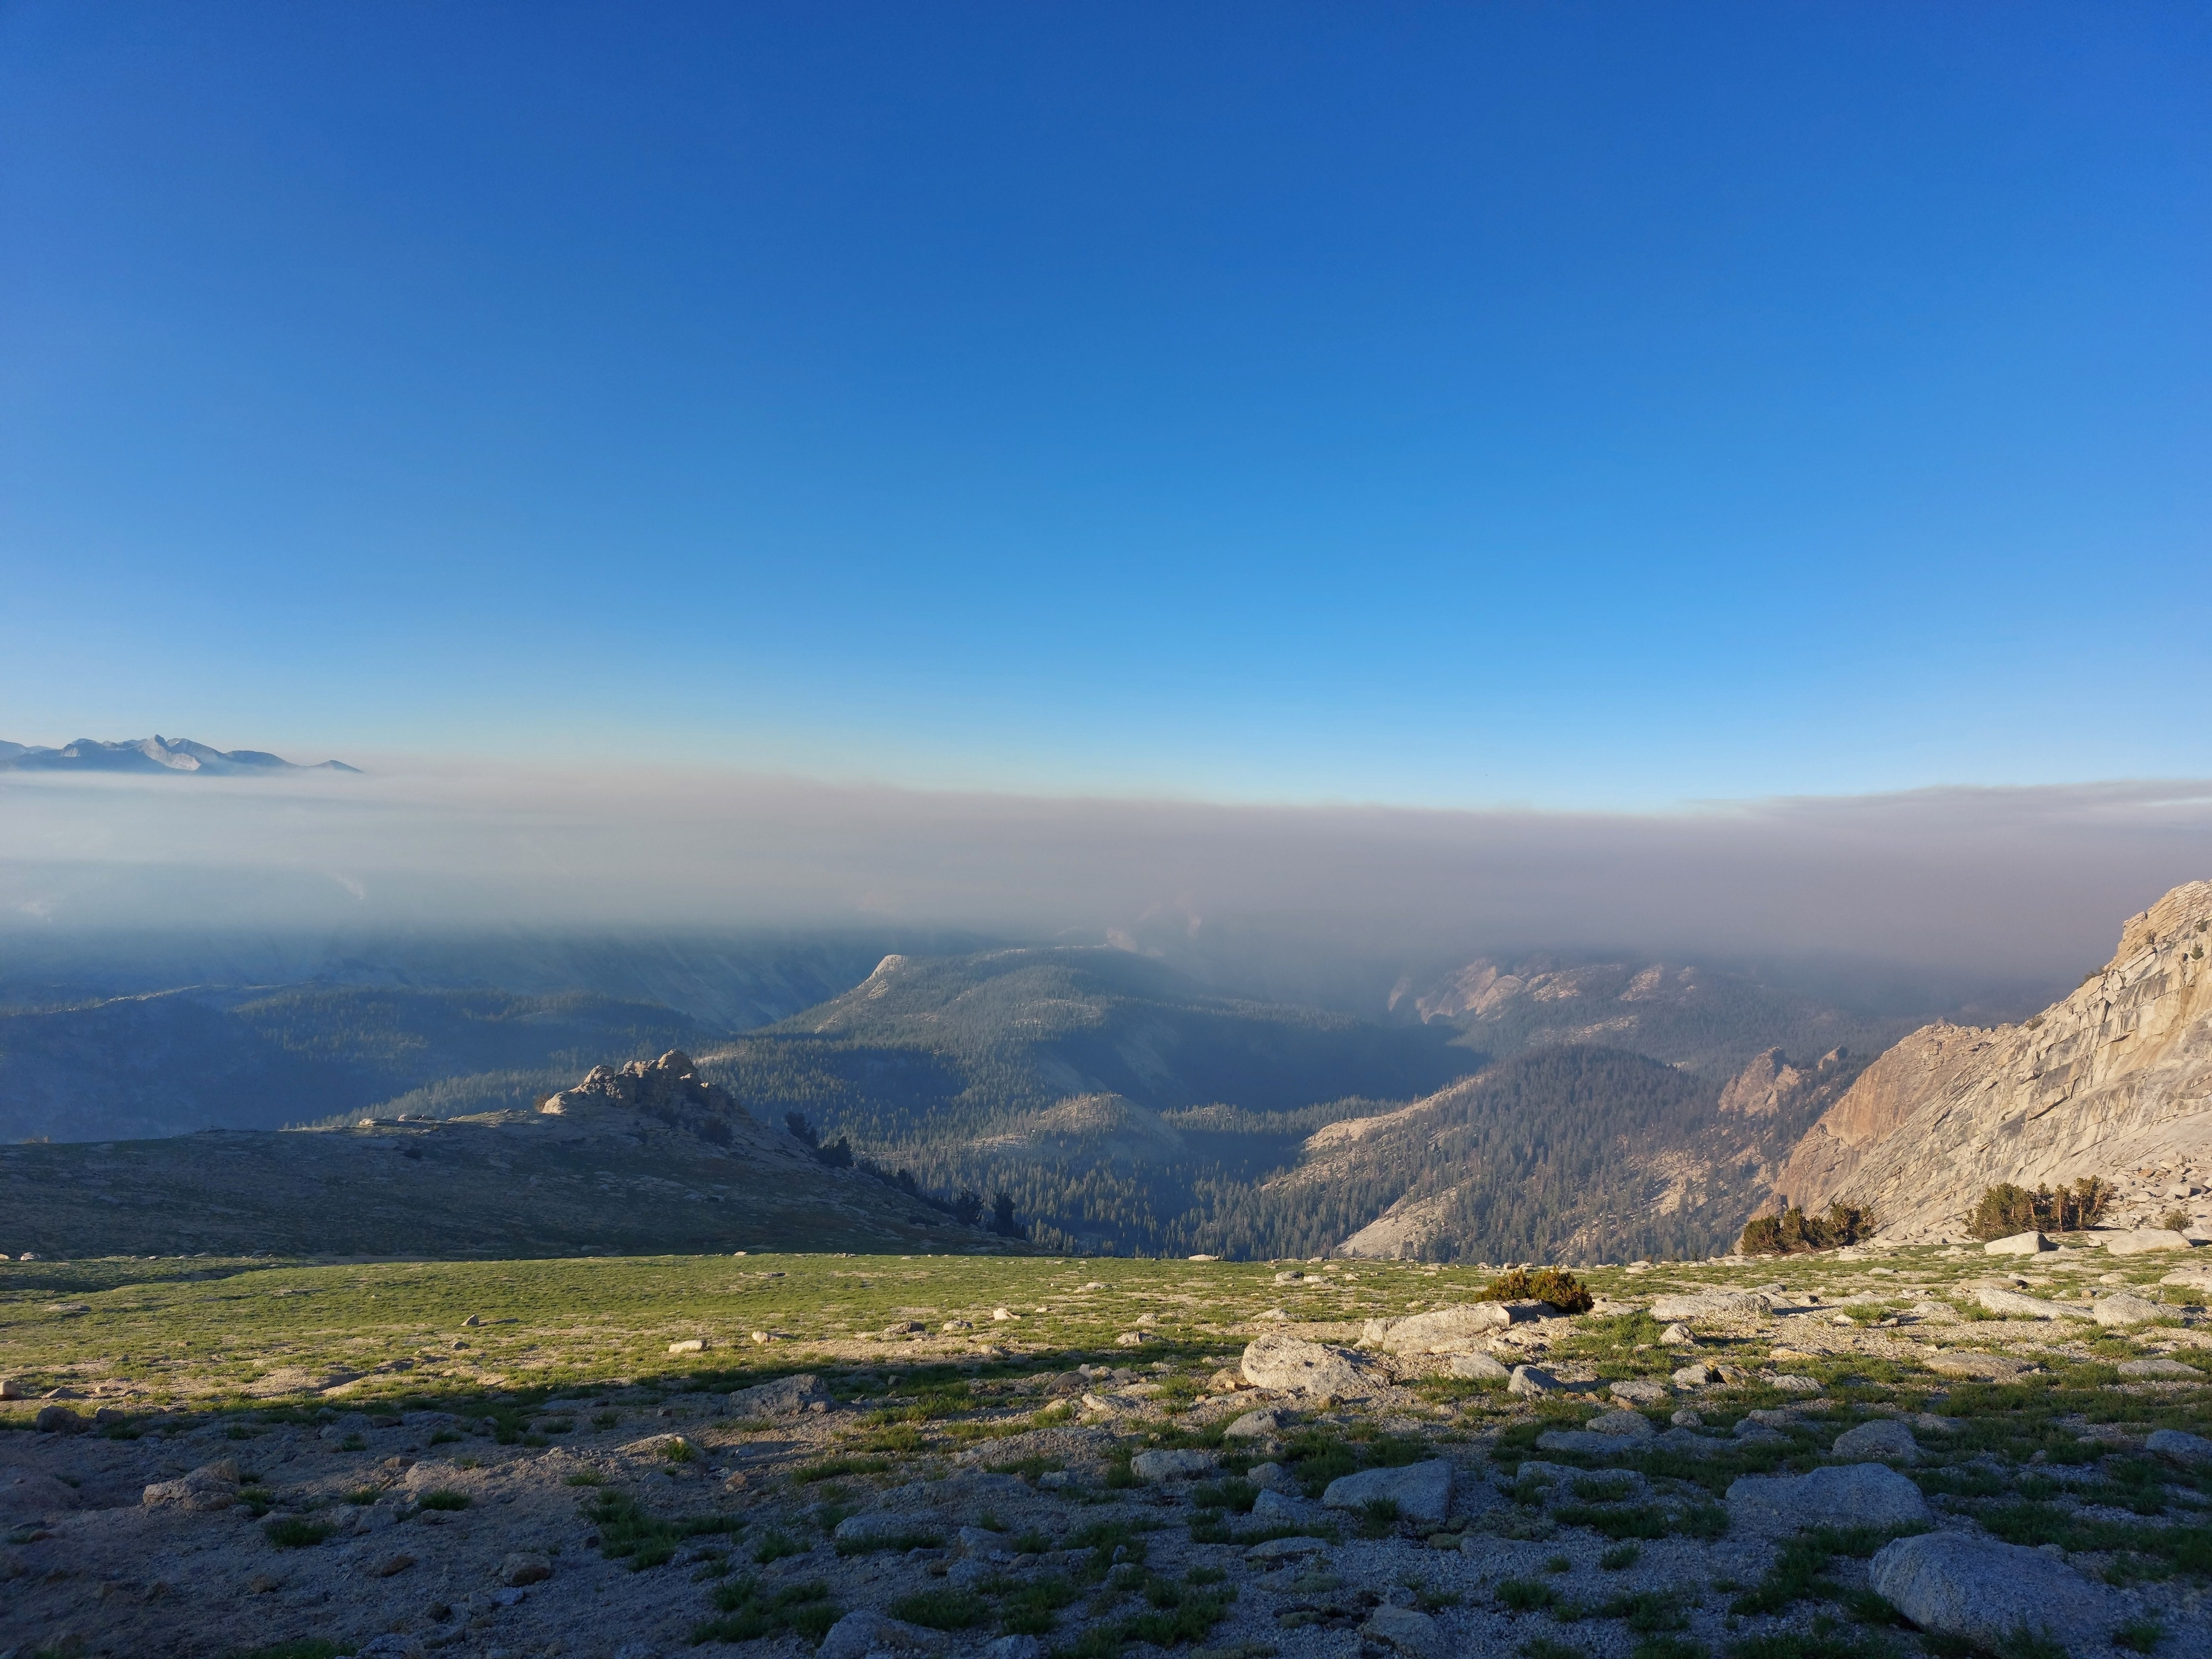 Yosemite valley buried in smoke